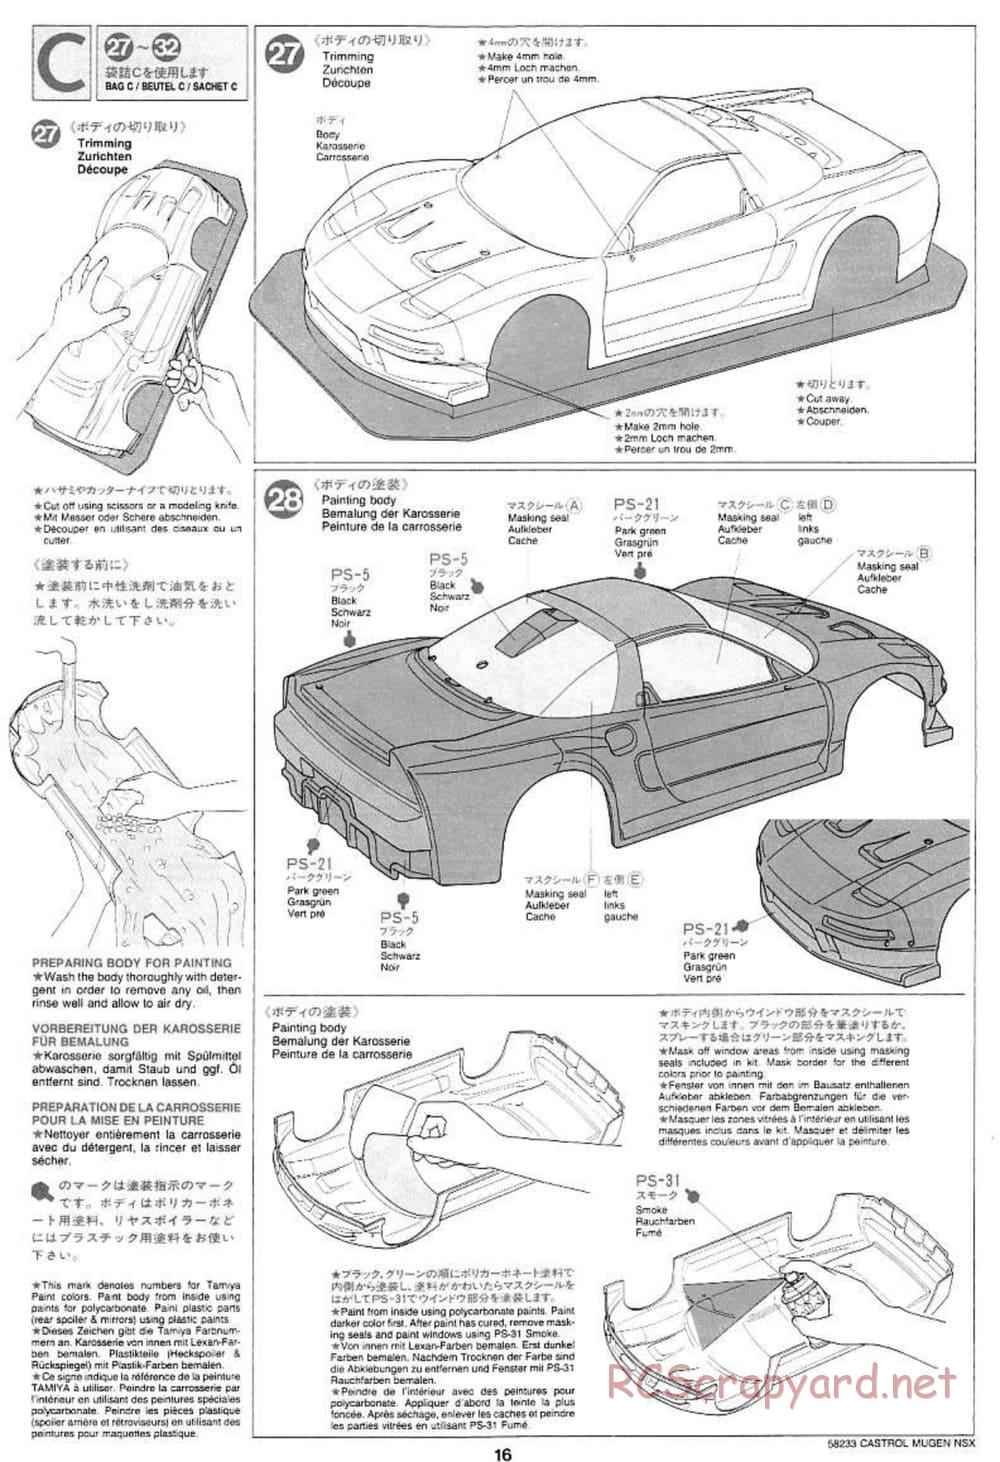 Tamiya - Castrol Mugen NSX - TL-01 Chassis - Manual - Page 16